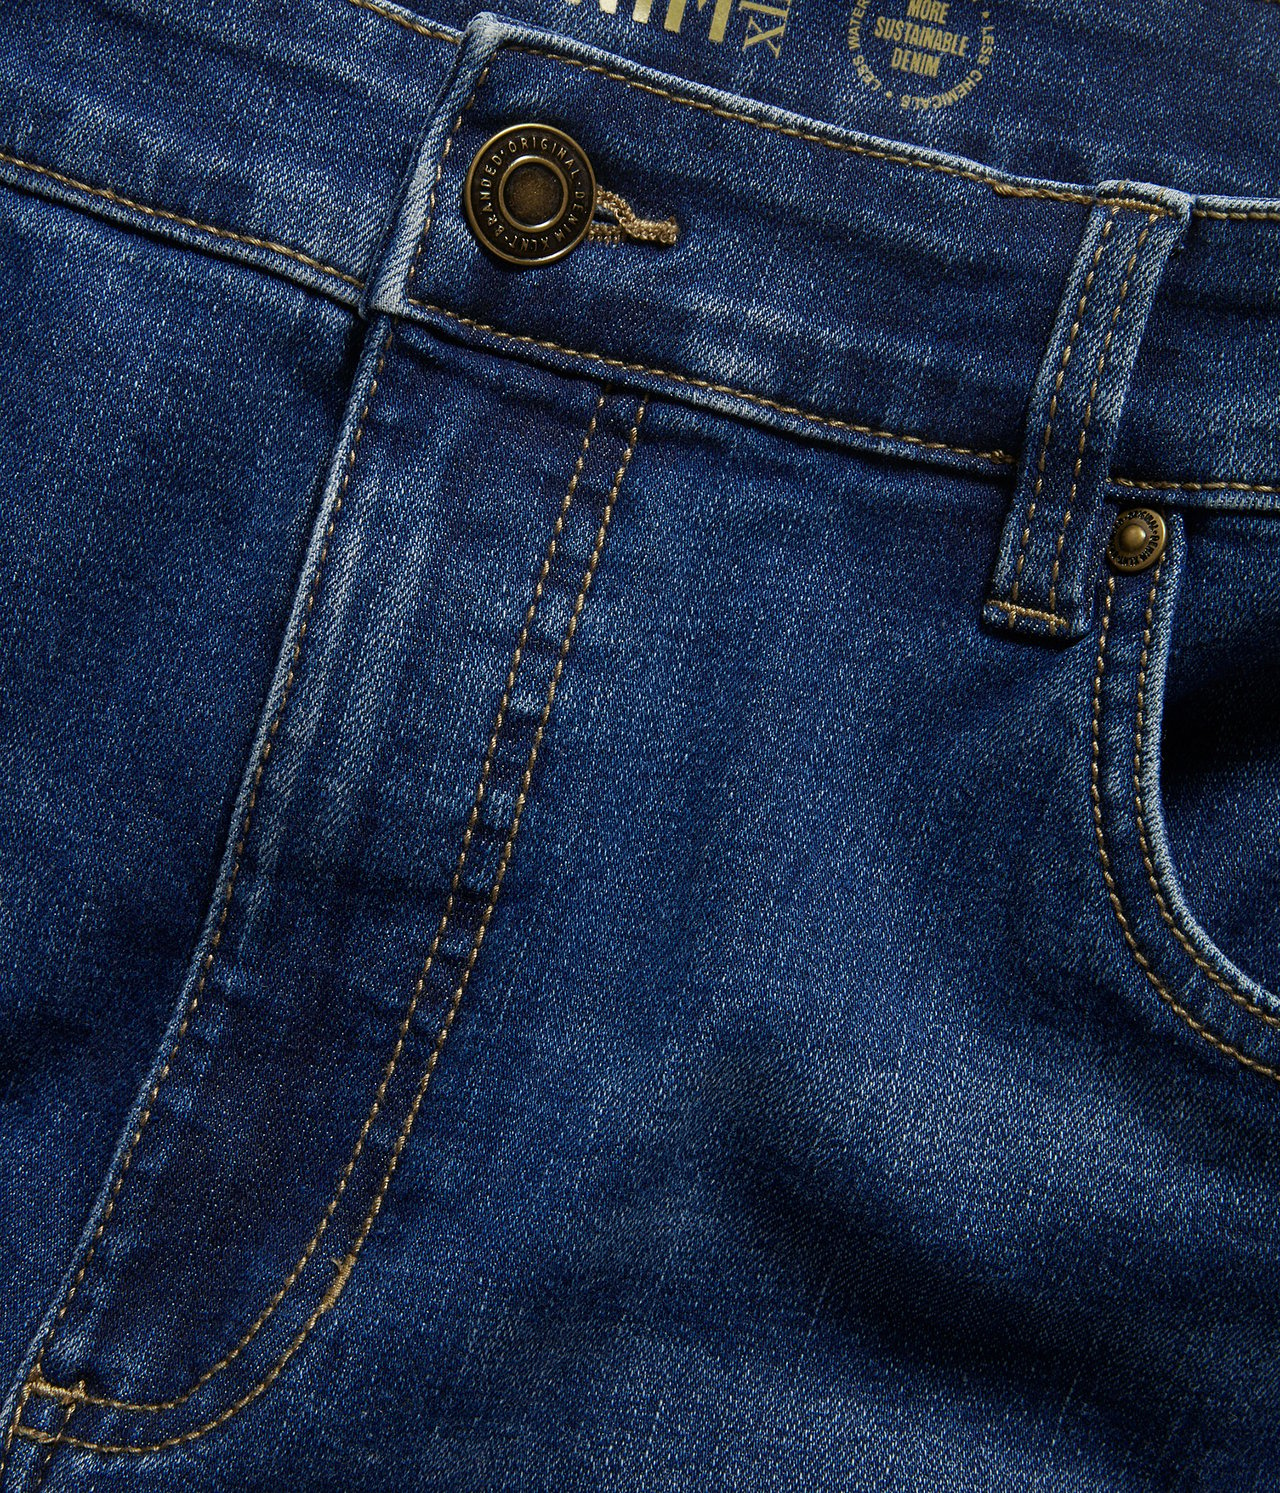 April bootcut jeans Denimi - null - 4